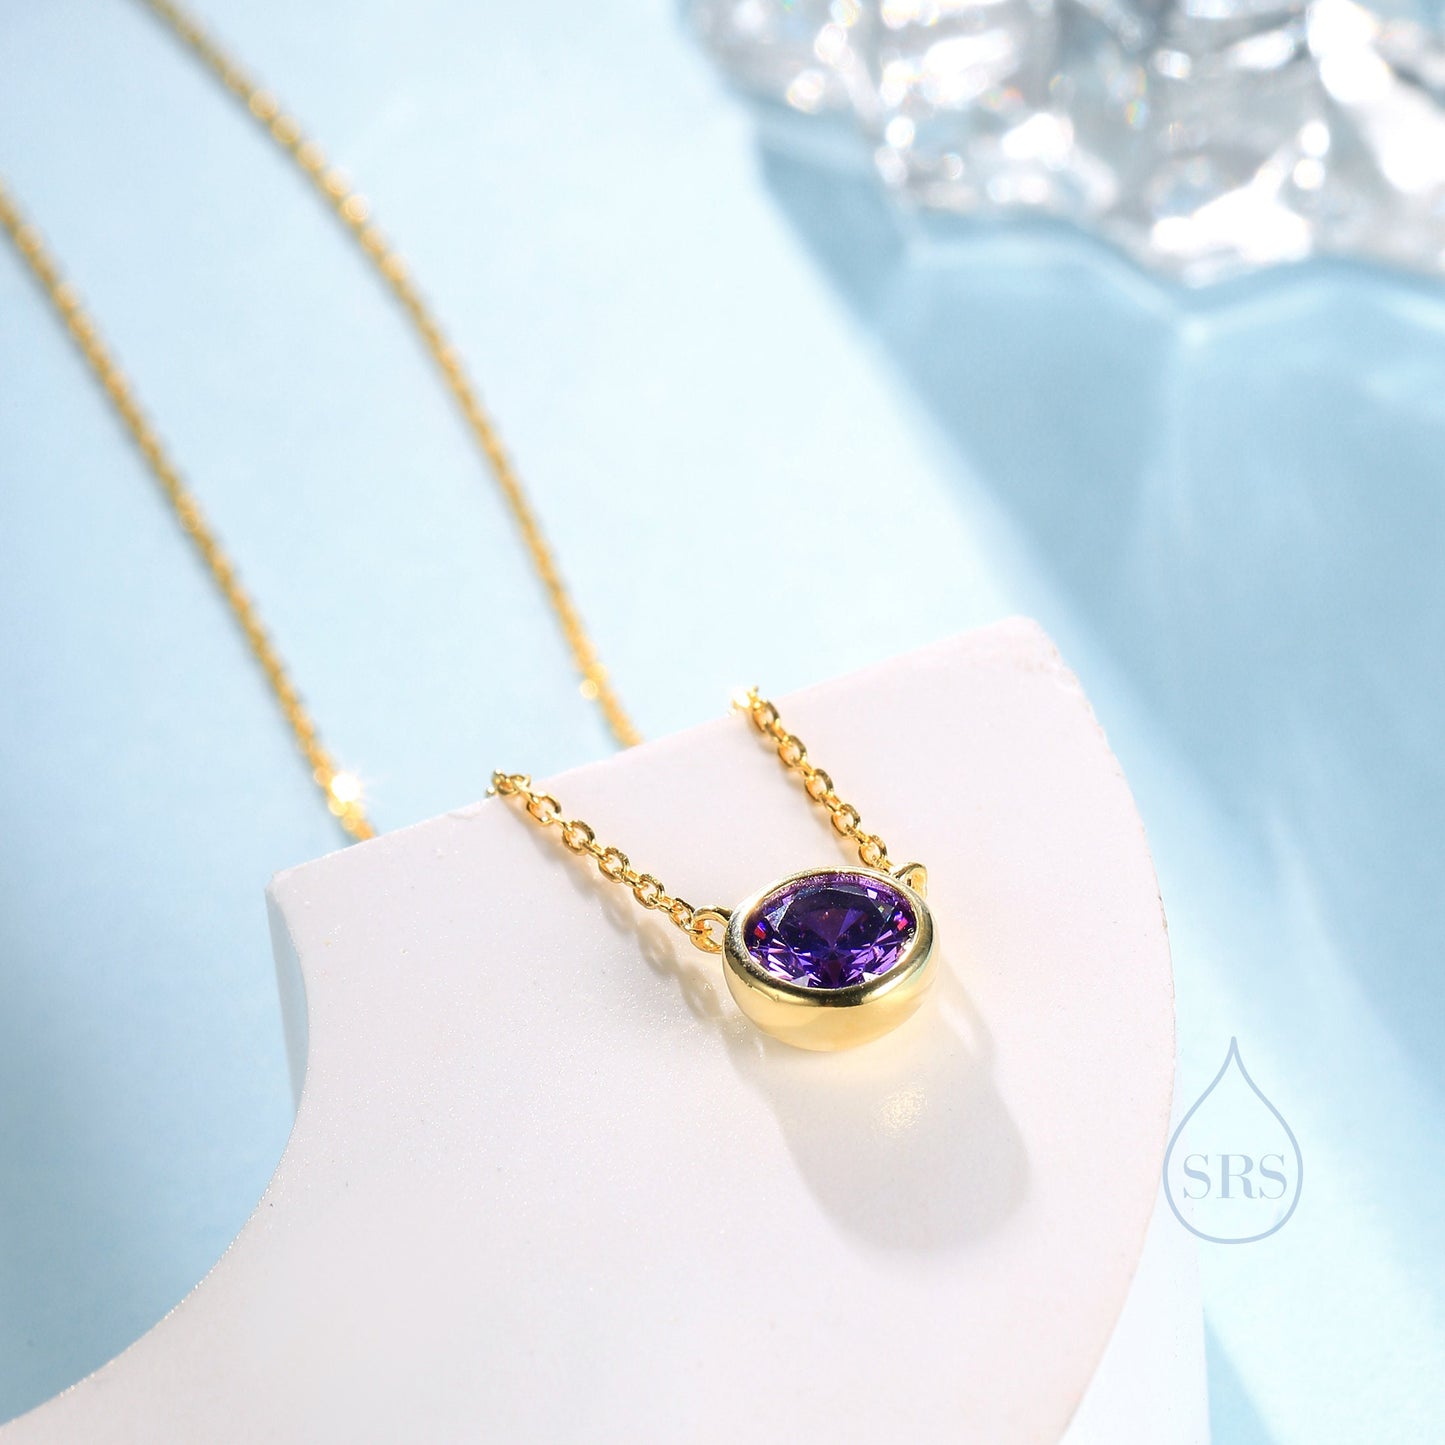 Dark Purple CZ Pendant Necklace  in Sterling Silver, Silver or Gold, Amethyst Purple Bubble Necklace